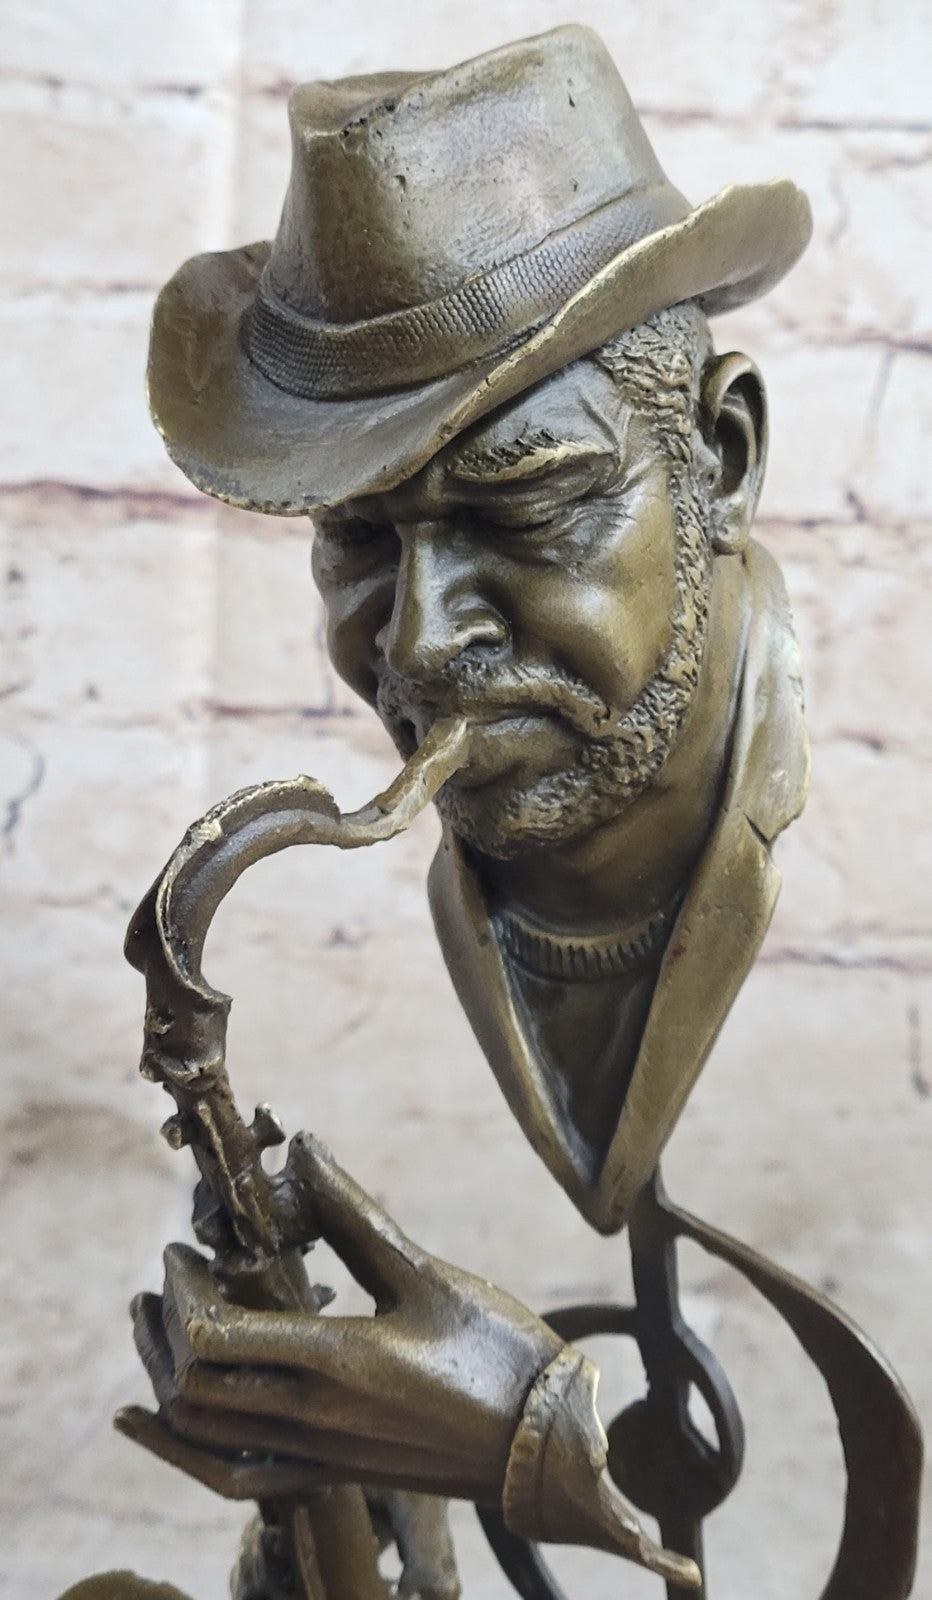 Bronze-metal-sculpture-Musician-Saxophone-Player-Hand-Made-by-Lost-Wax-Method